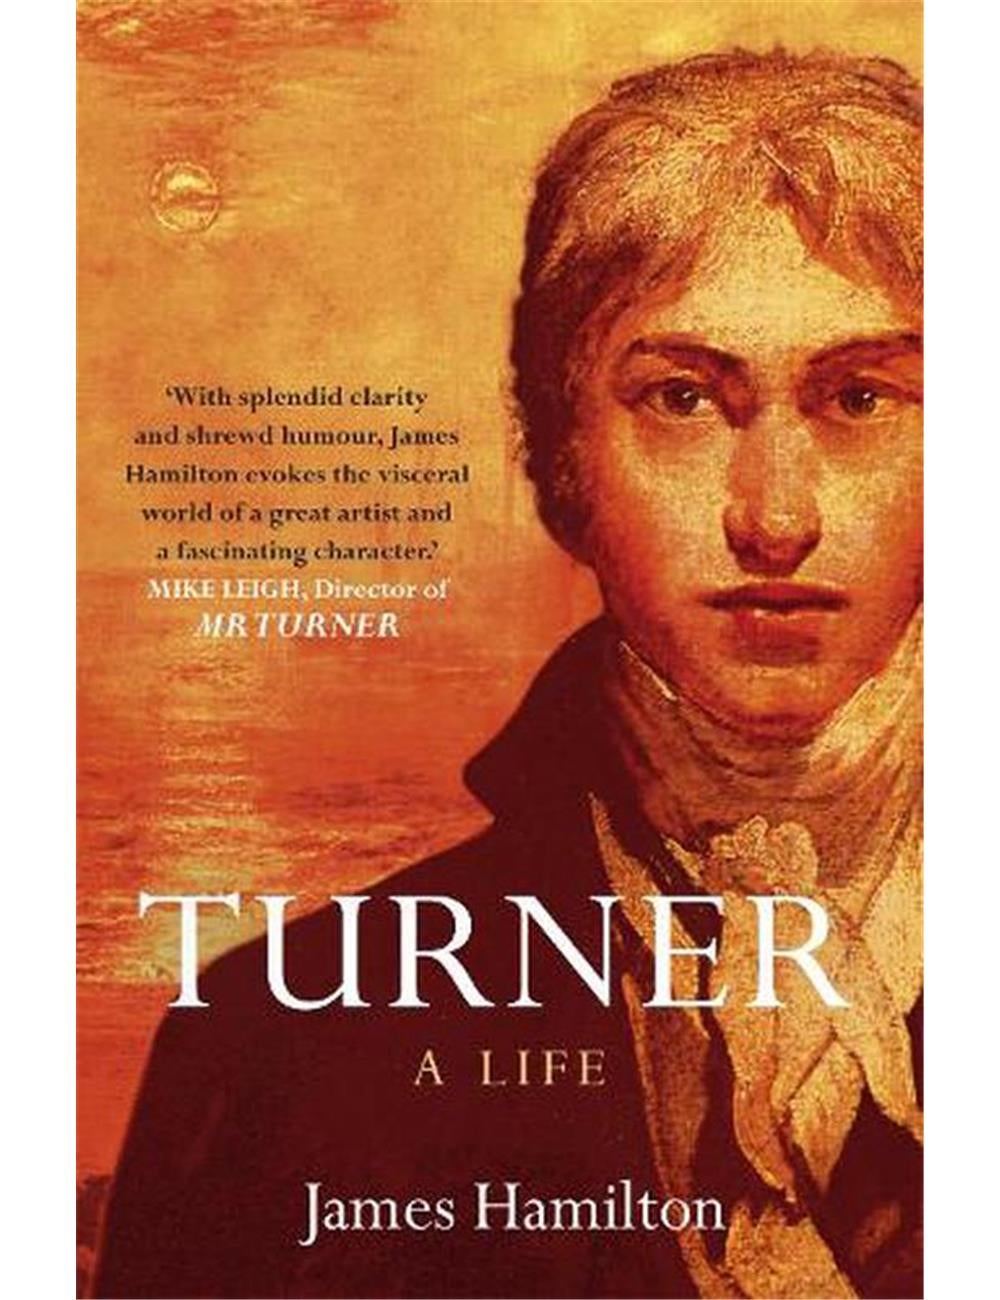 Turner A Life by James Hamilton